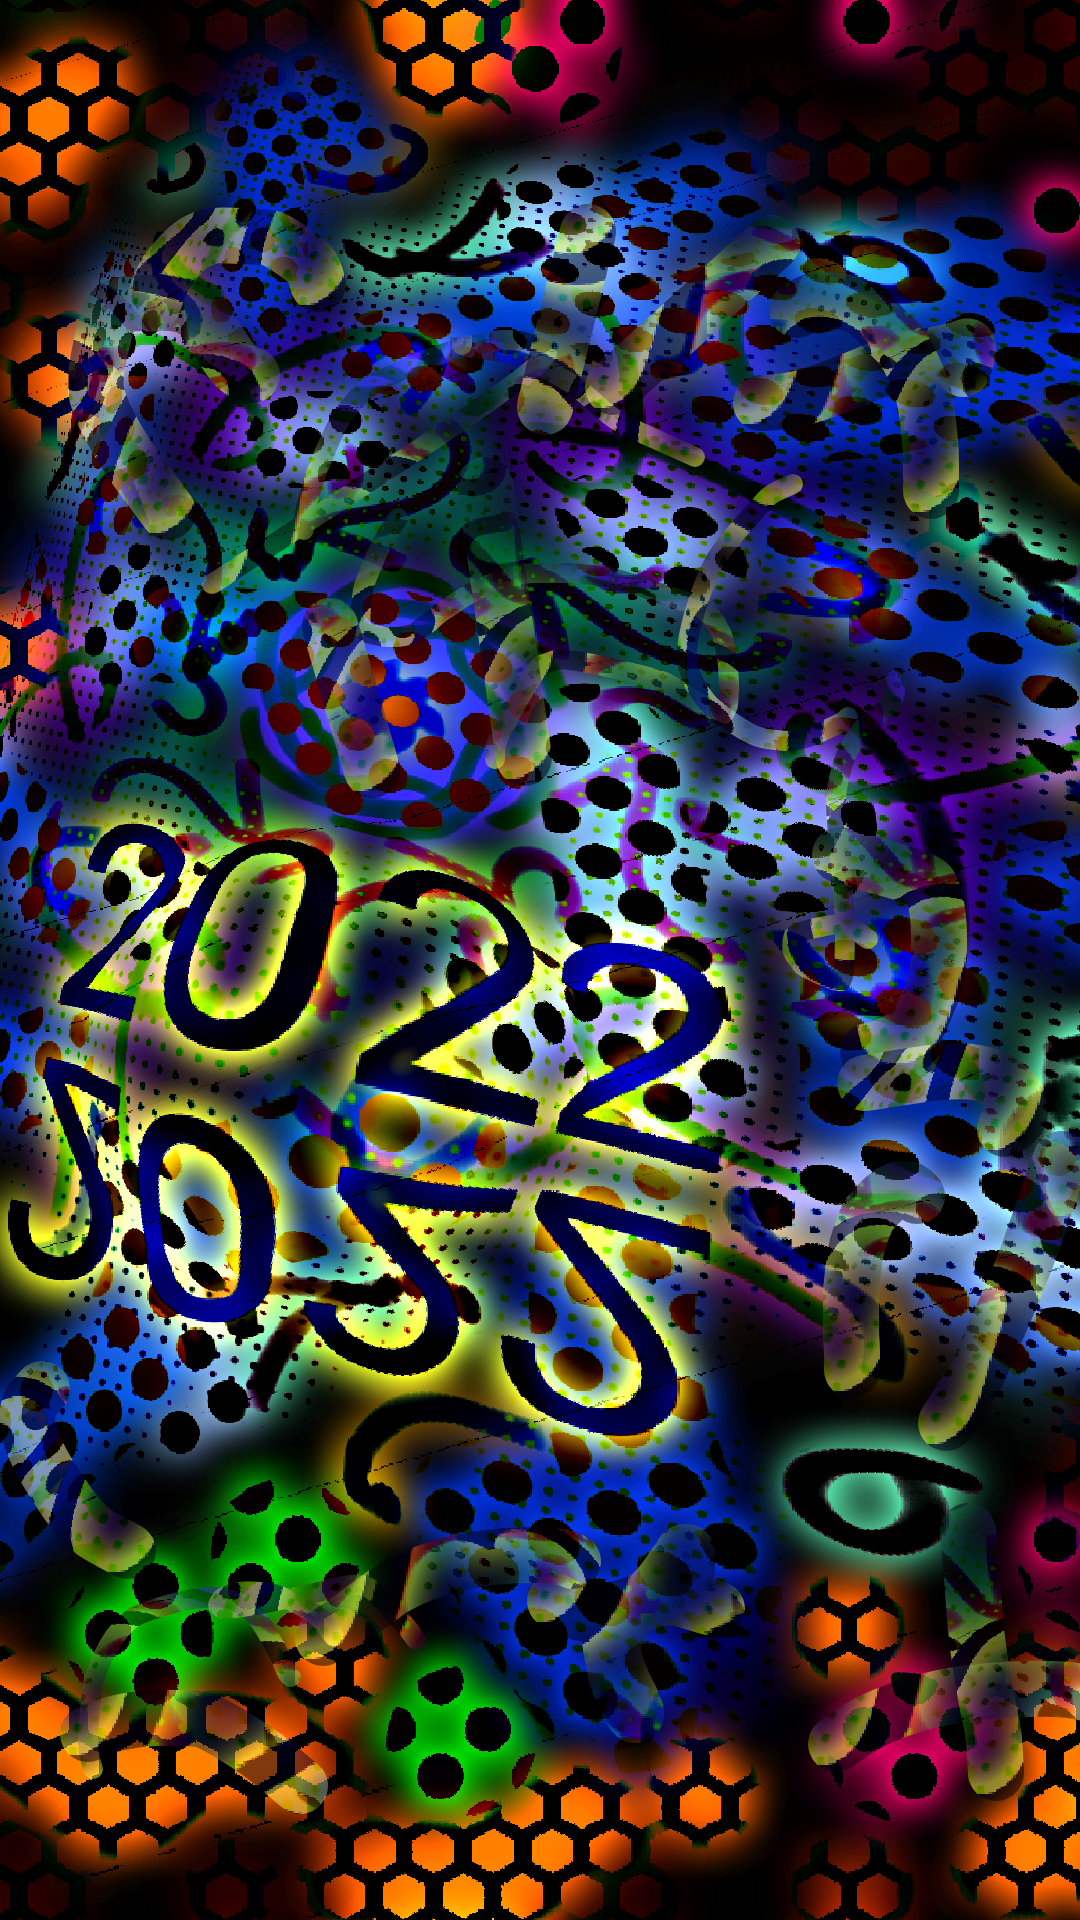 sumo02jan01 - vytvořil artzner s paint